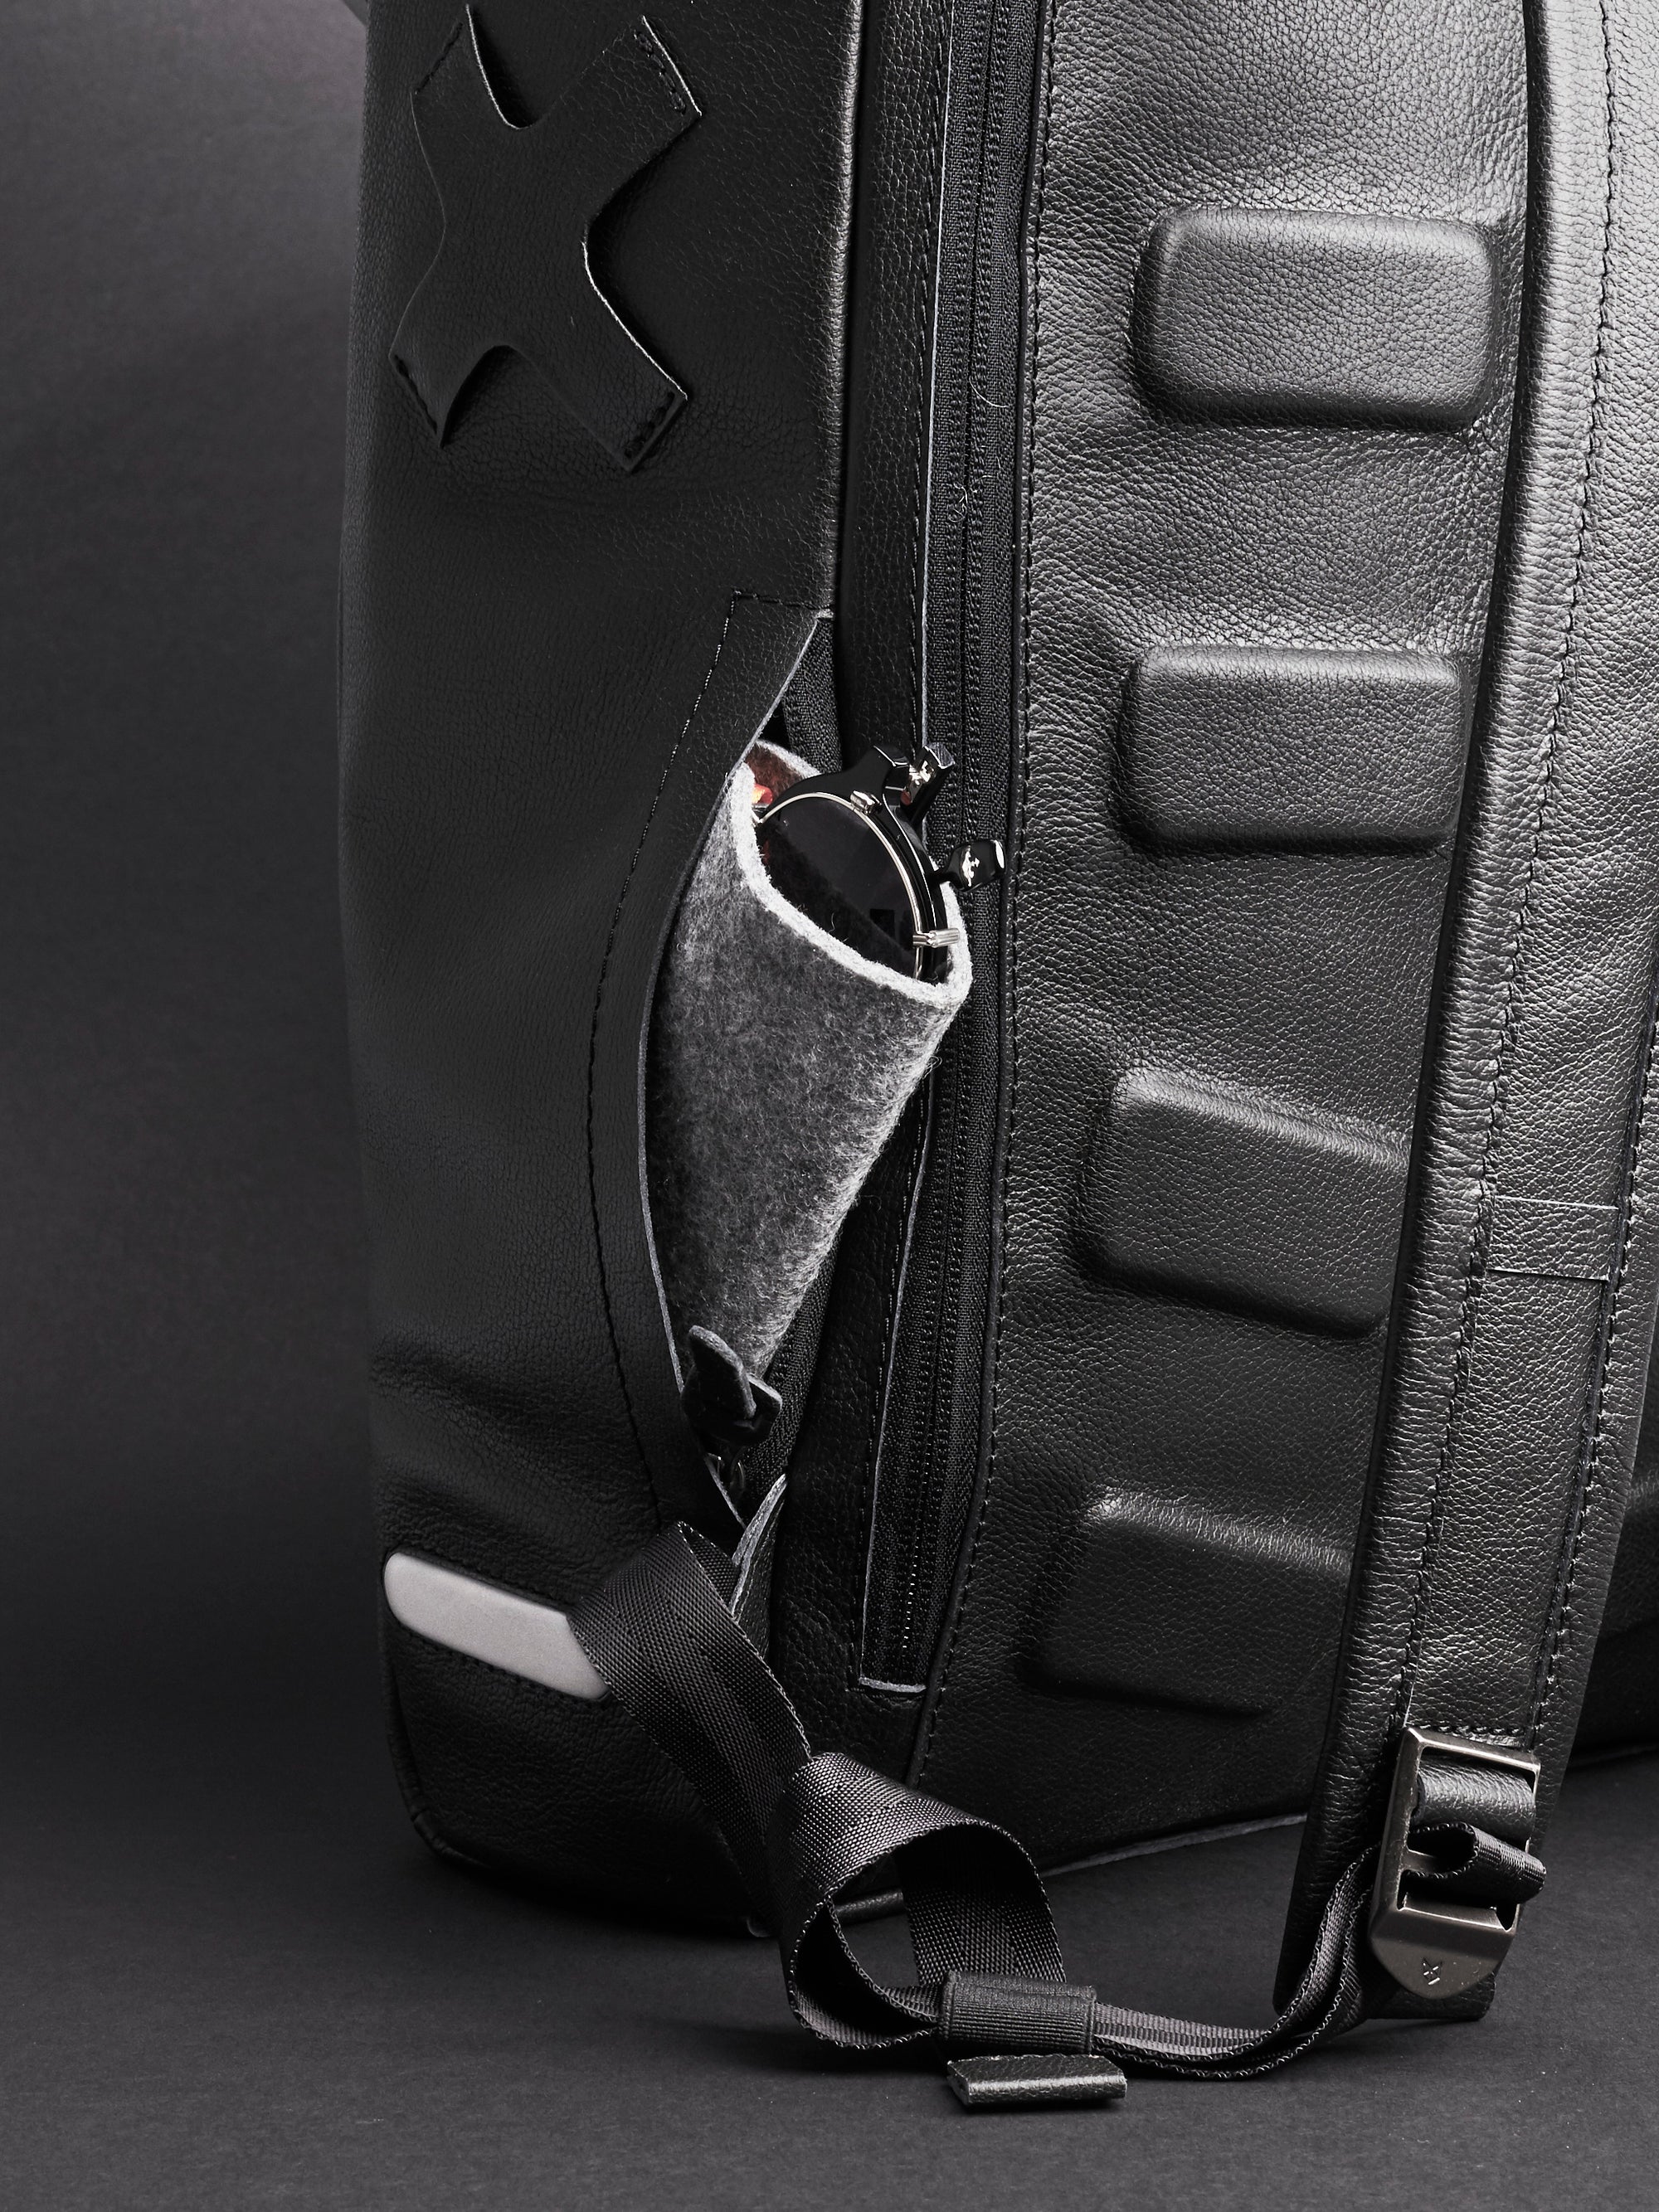 backpack black designed for bike by capra leather